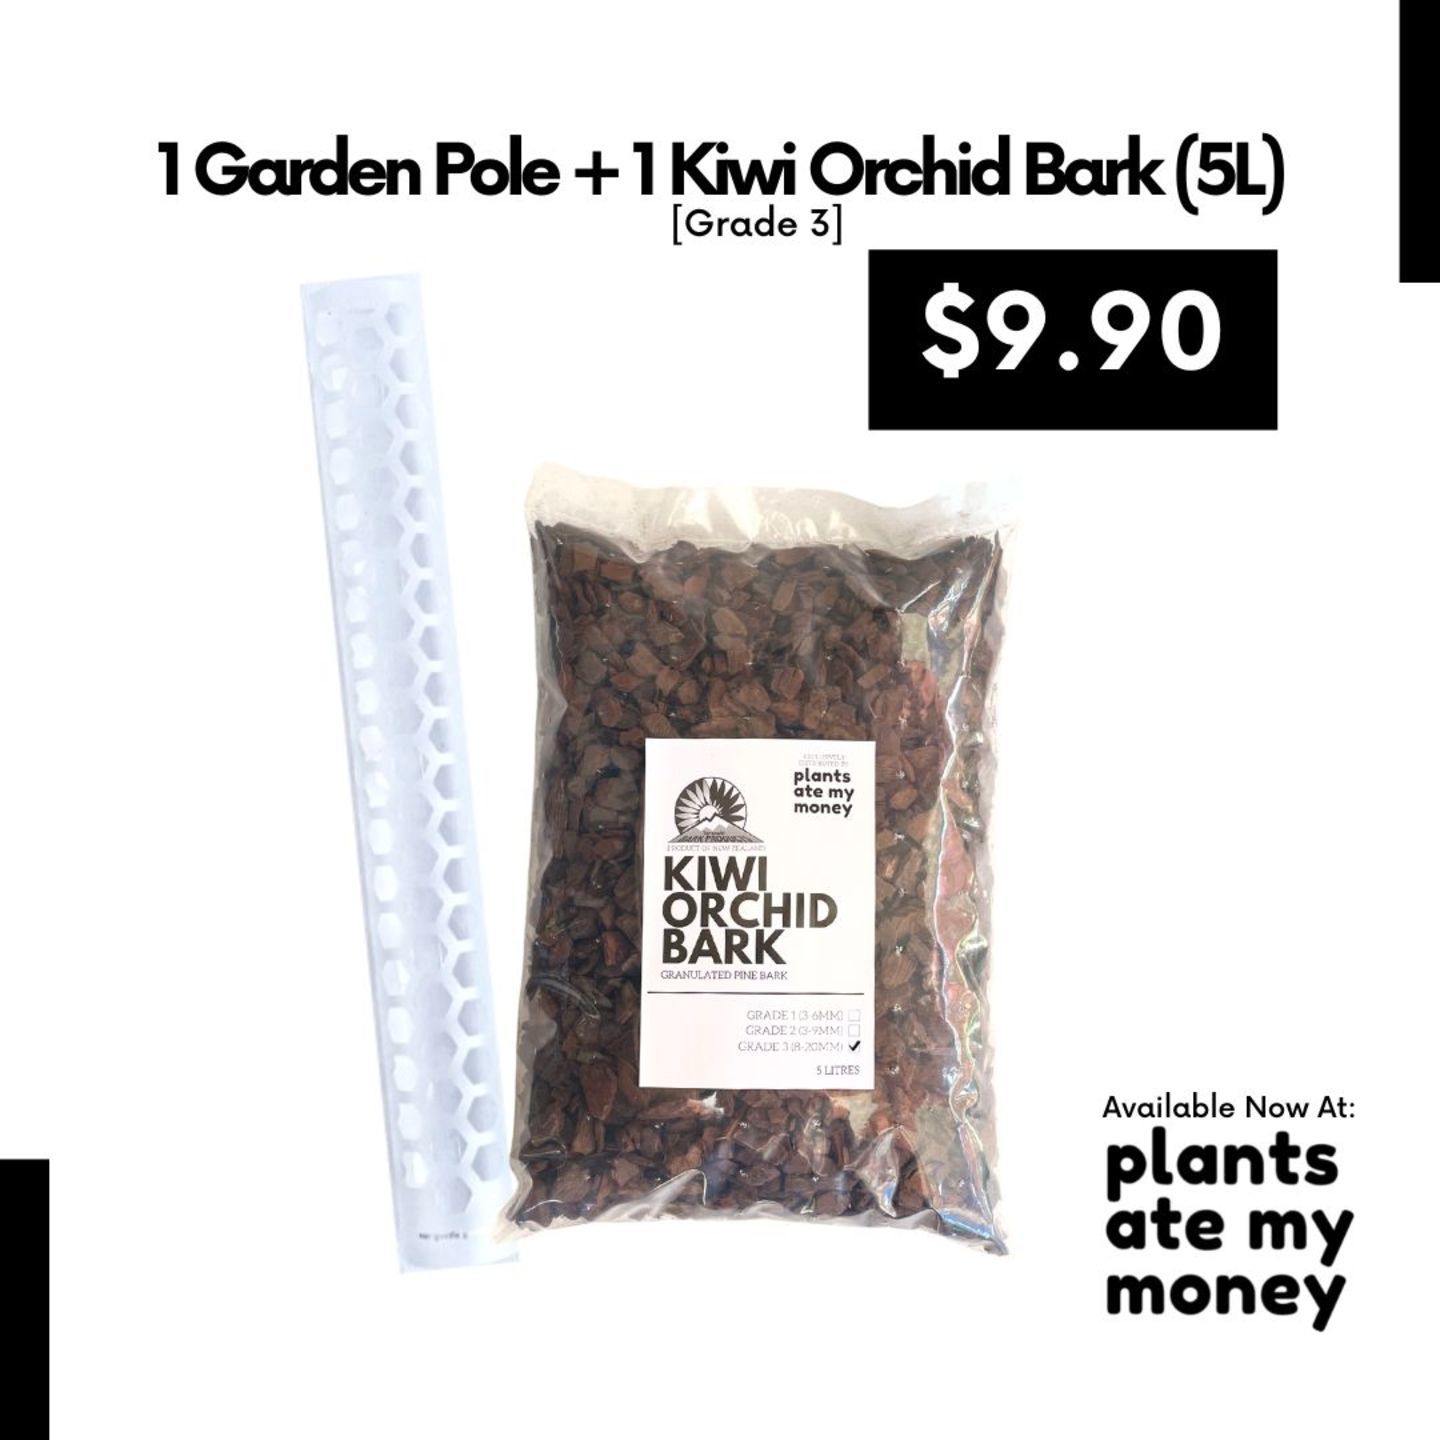 1 Garden Pole + 1 Kiwi Orchid Bark (5L)